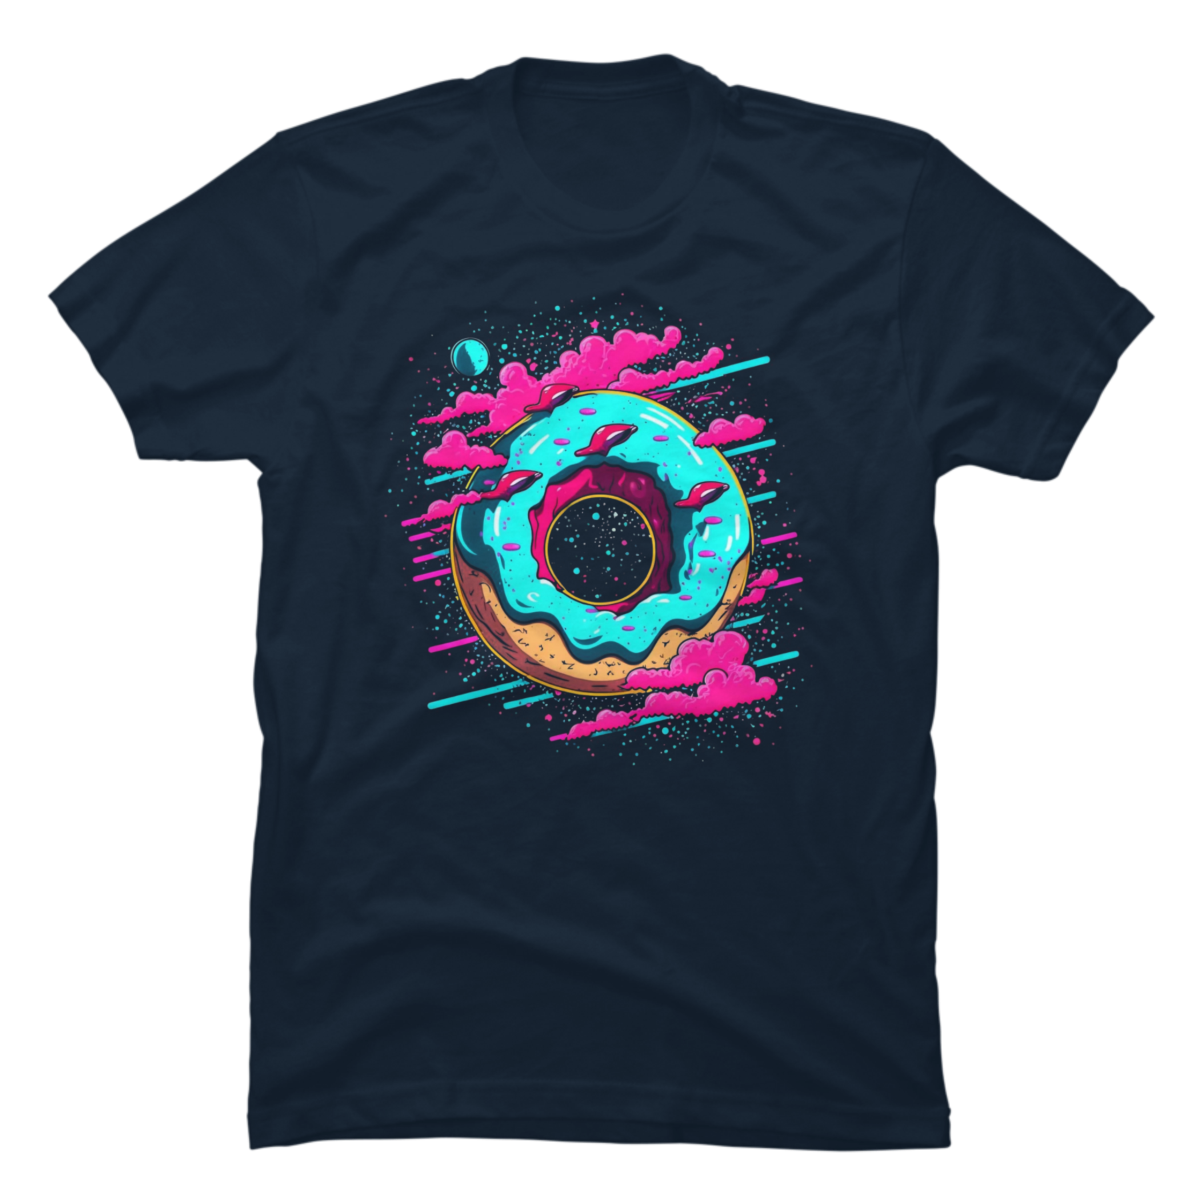 Cosmic Donut | Shirt Design by Jeff Desmond on Dribbble